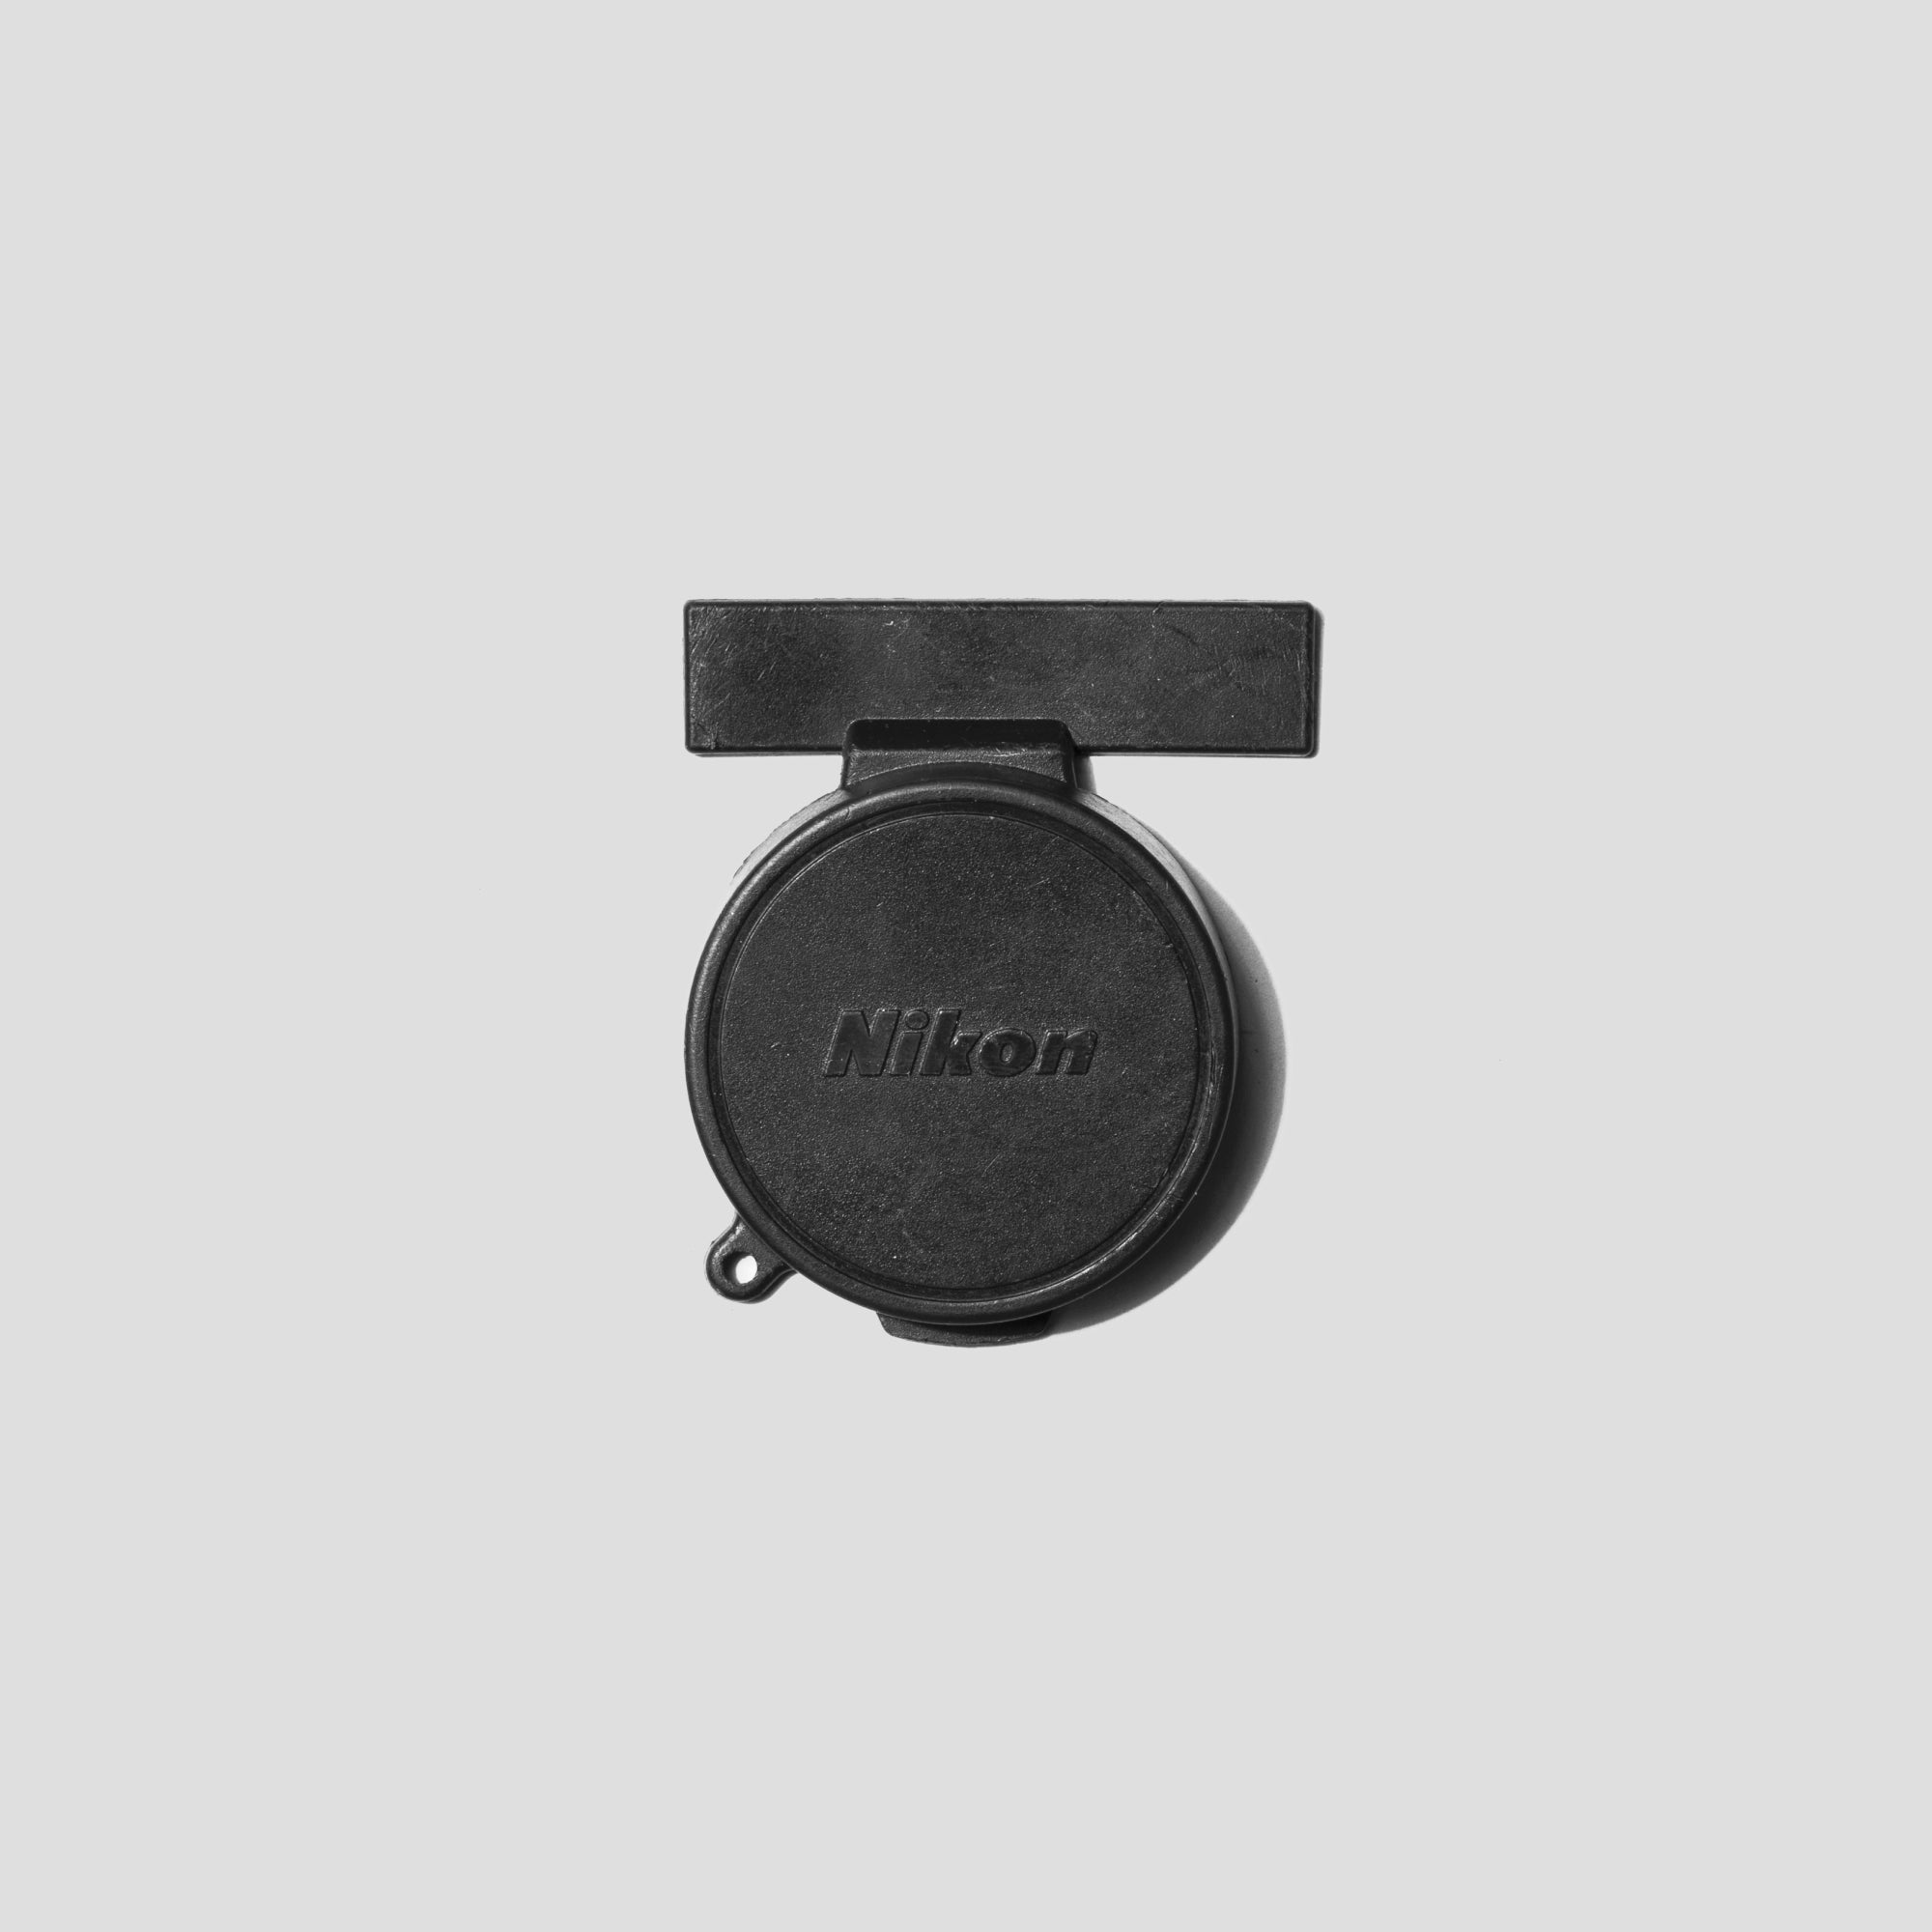 Buy Nikon L35af Lens Cap now at Analogue Amsterdam